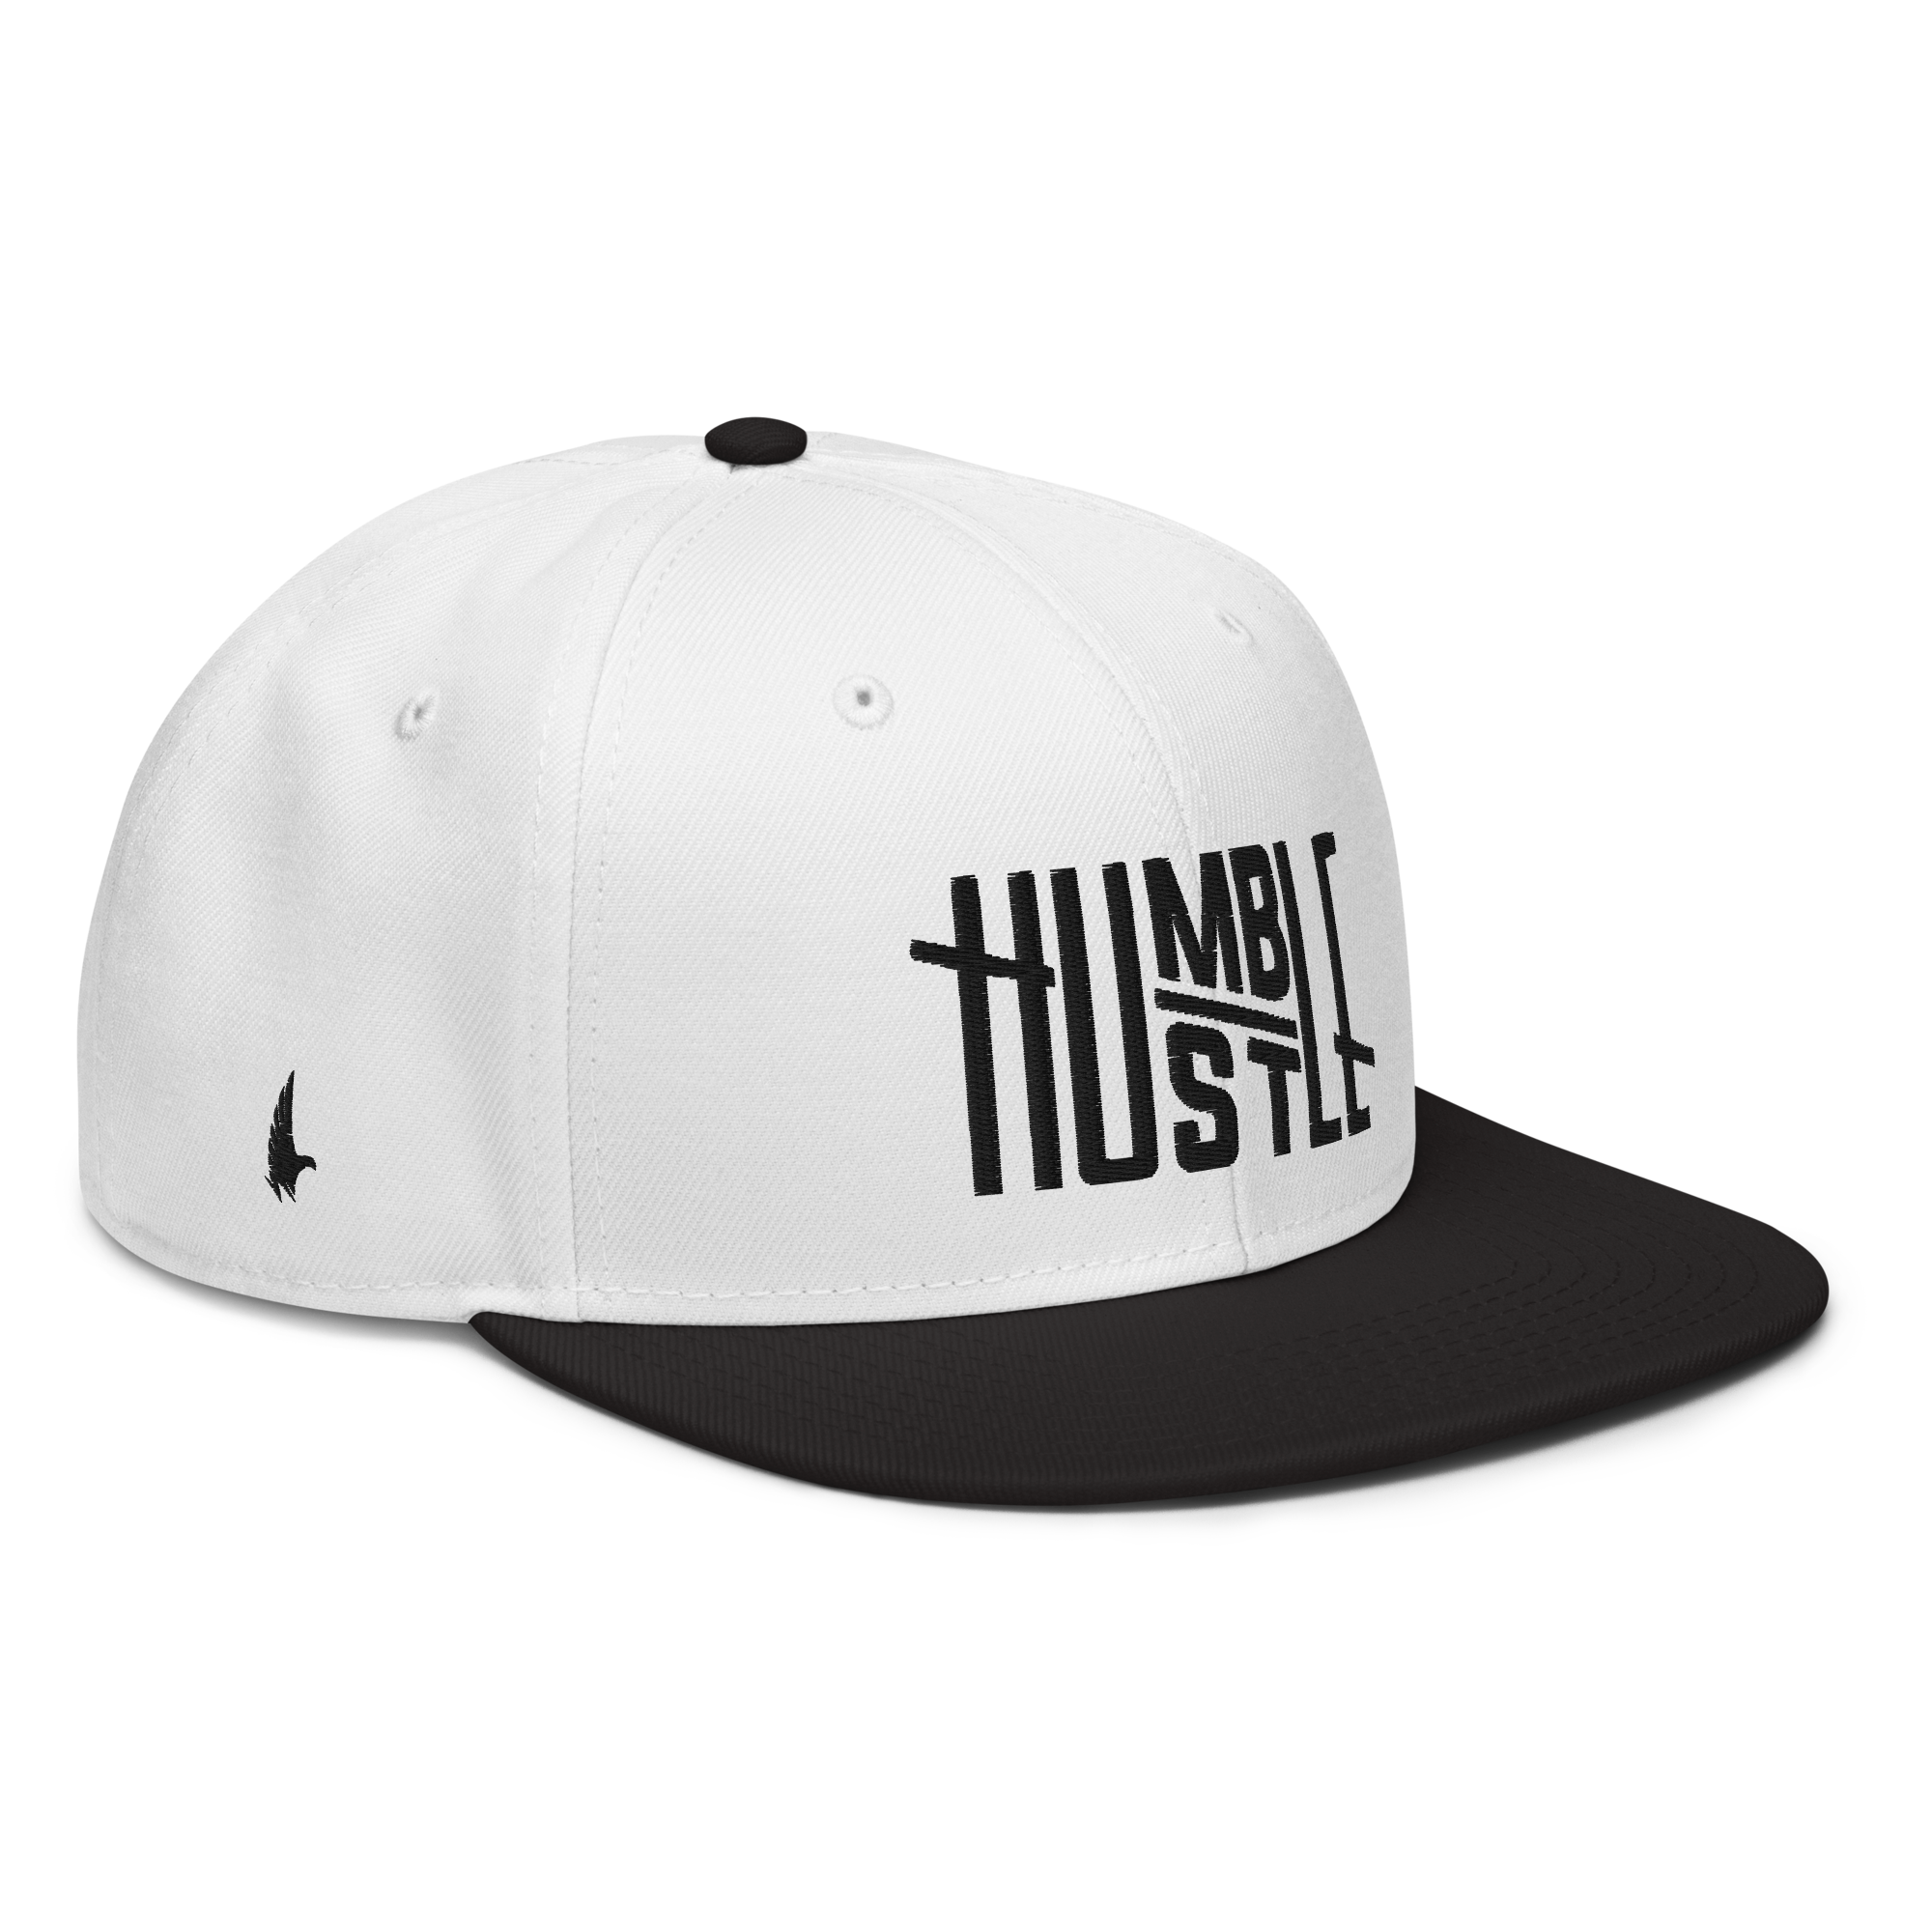 Humble Hustle Snapback Hat - White/Black/Black OS - Loyalty Vibes